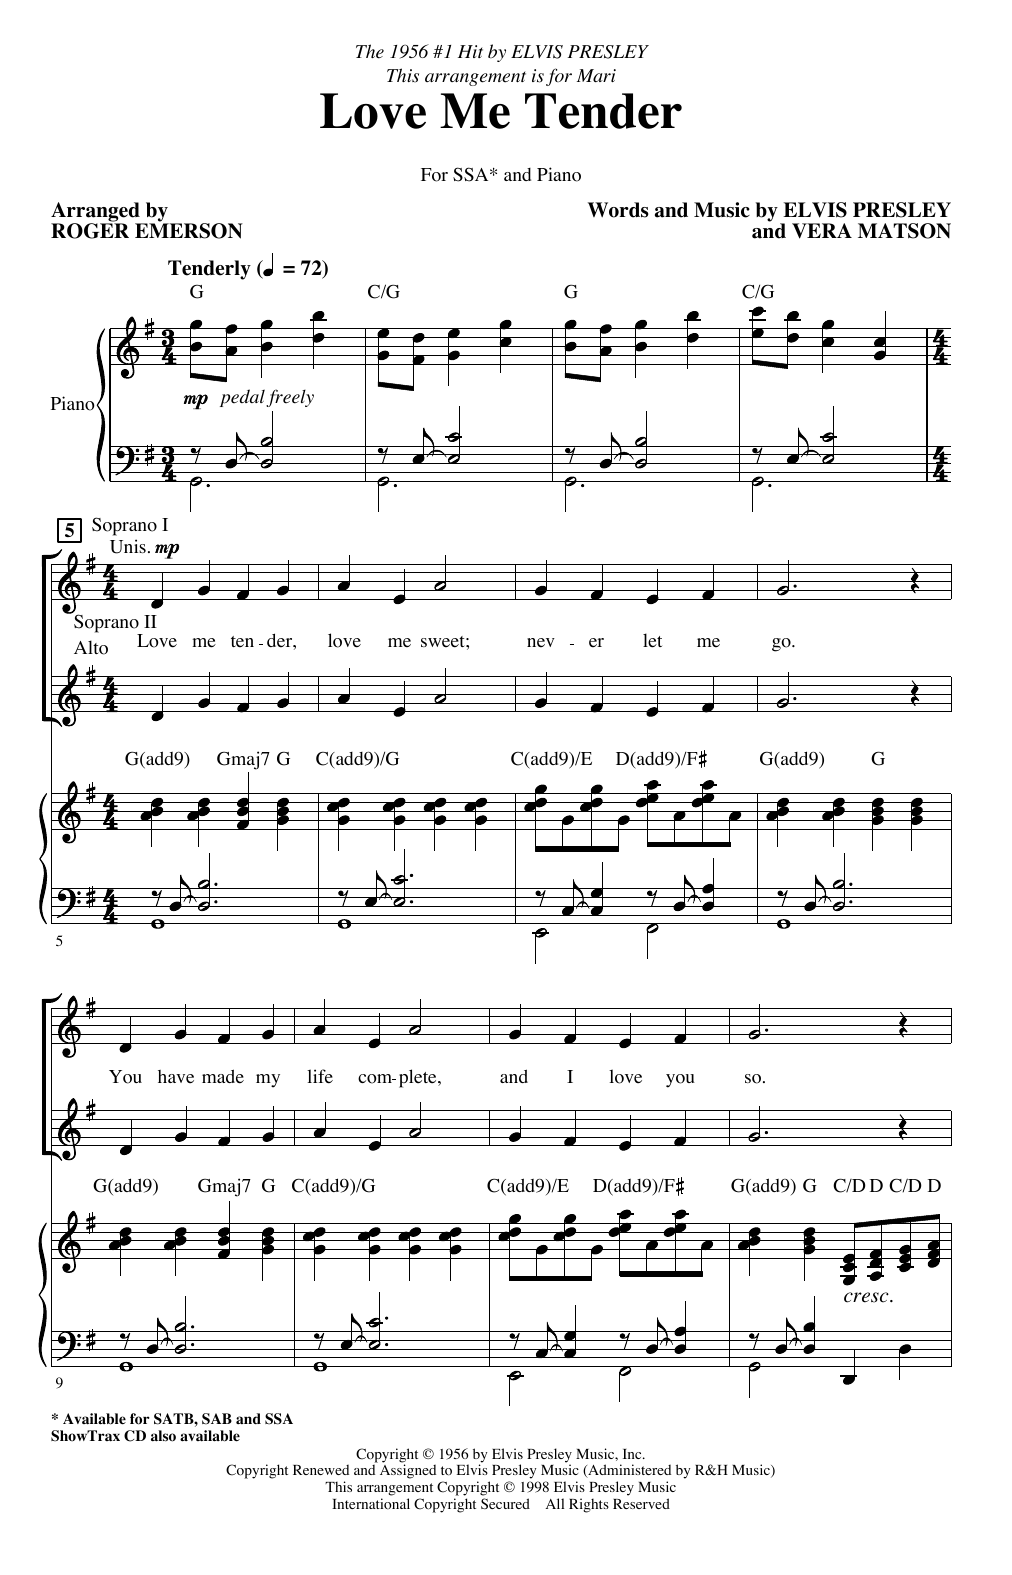 Elvis Presley Love Me Tender (arr. Roger Emerson) Sheet Music Notes & Chords for SAB Choir - Download or Print PDF